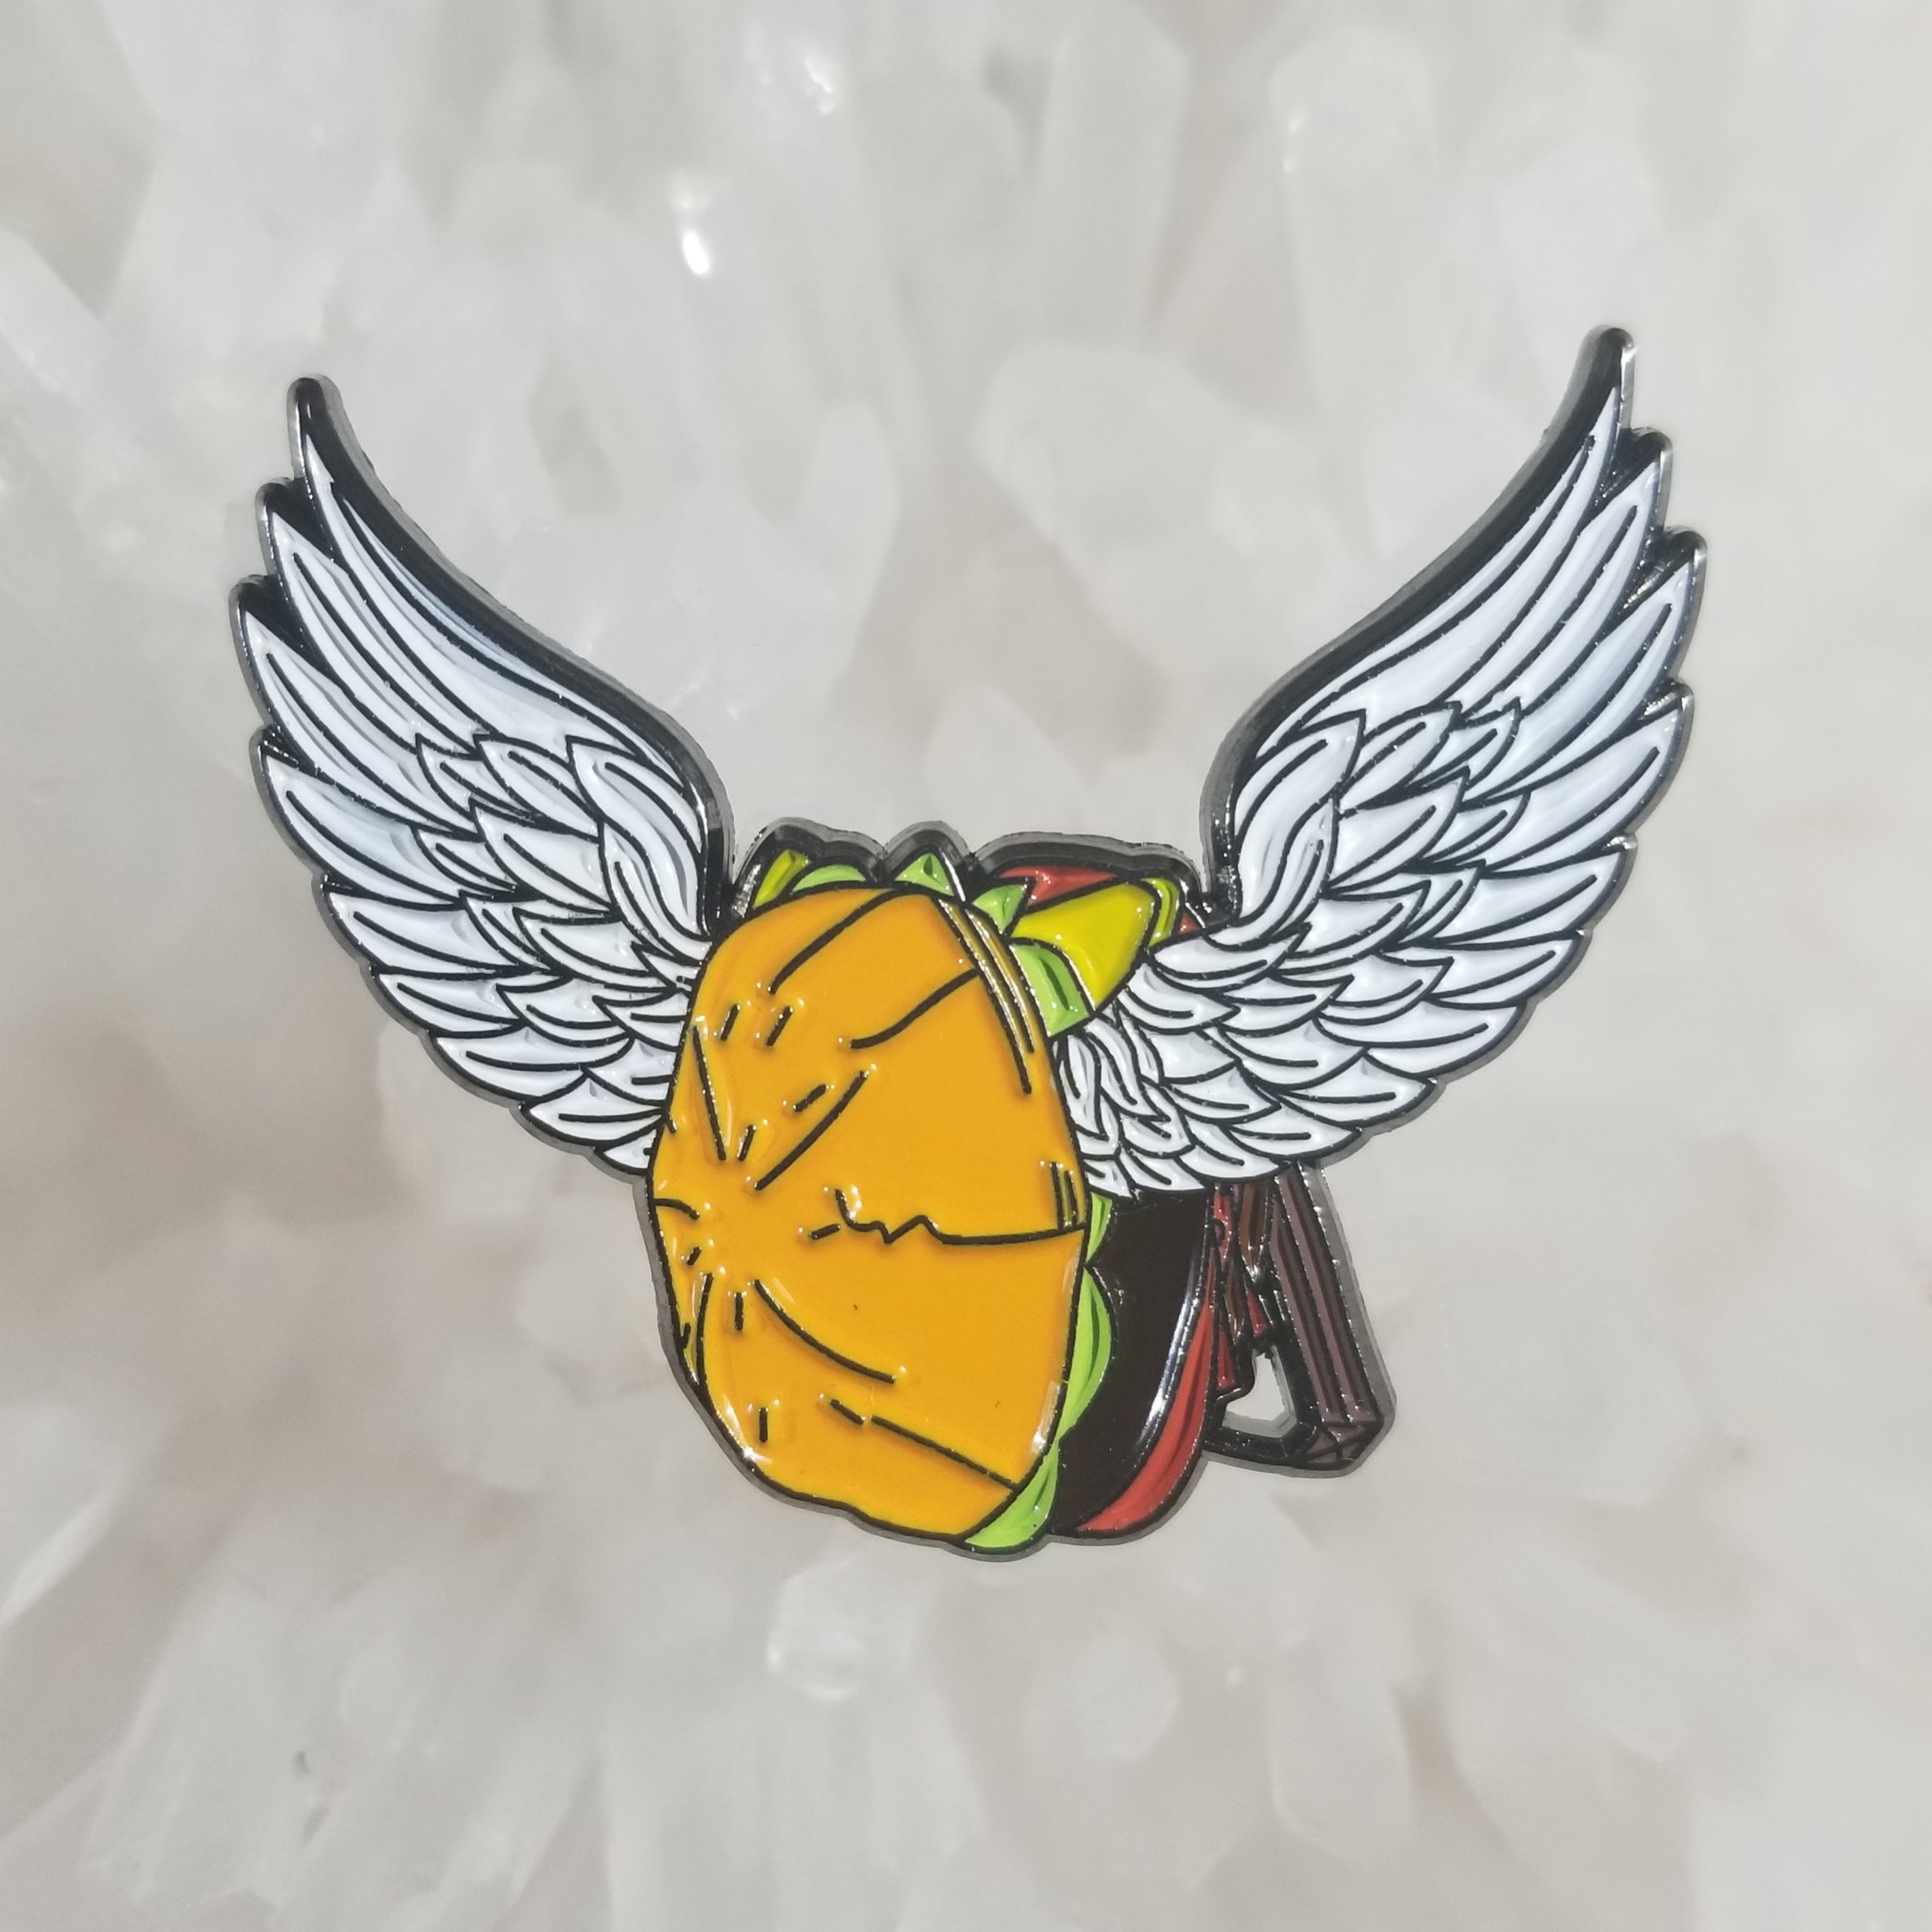 Cheeseburger Backpack Wings Enamel Pins Hat Pins Lapel Pin Brooch Badge Festival Pin